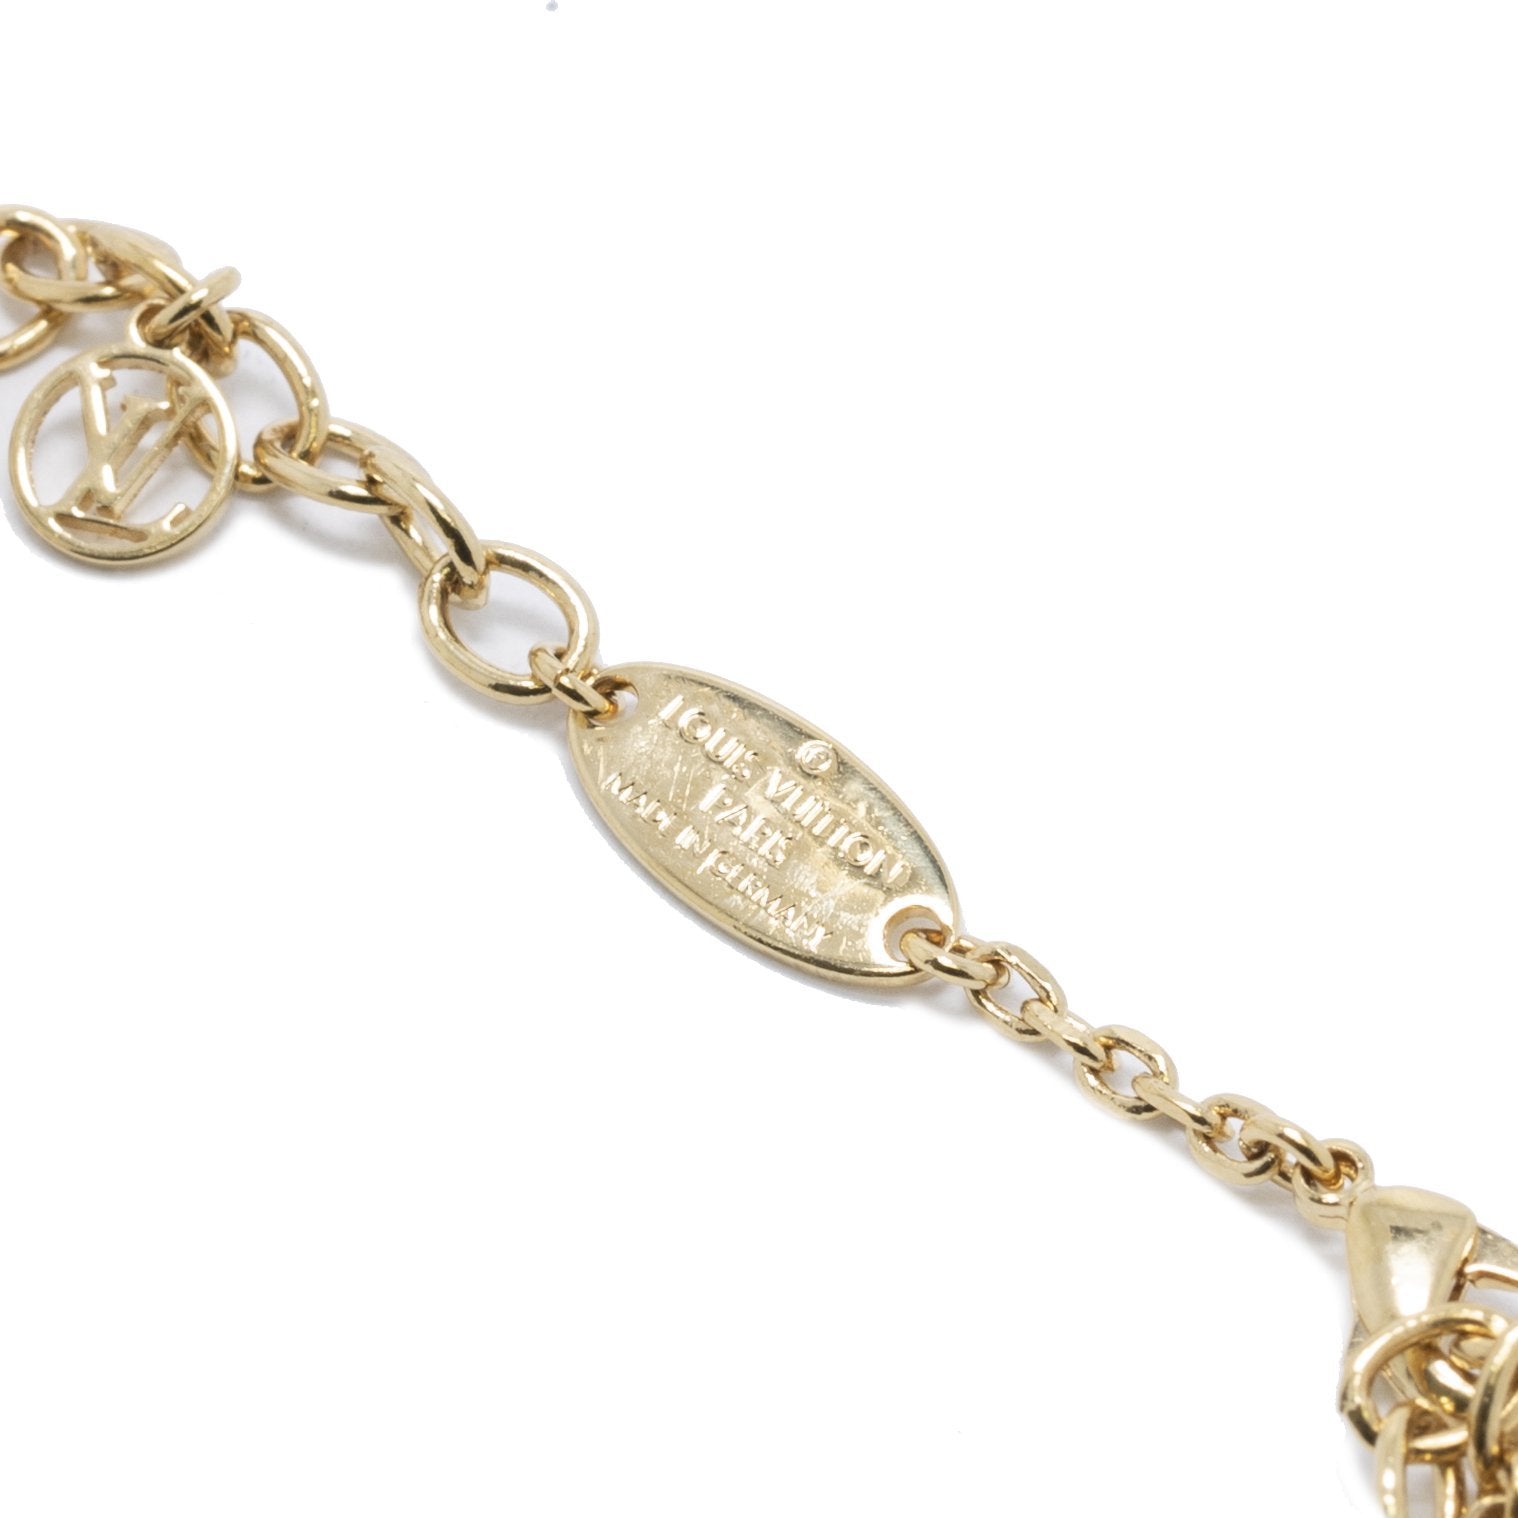 Blooming bracelet Louis Vuitton Gold in Metal - 33589603